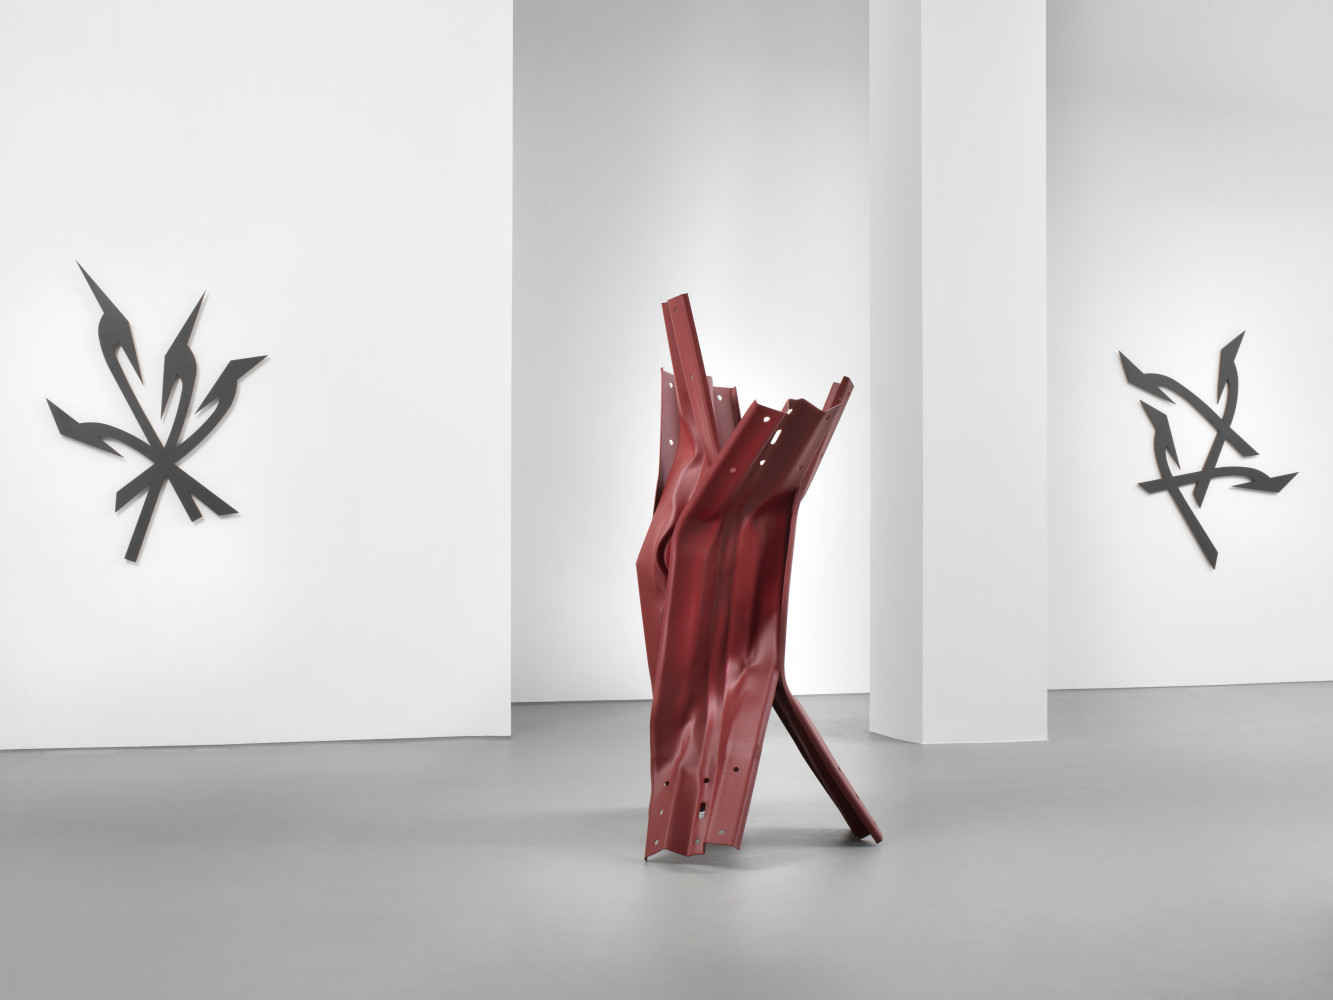 Bettina Pousttchi, ‘Directions’, Installationsansicht, 2021